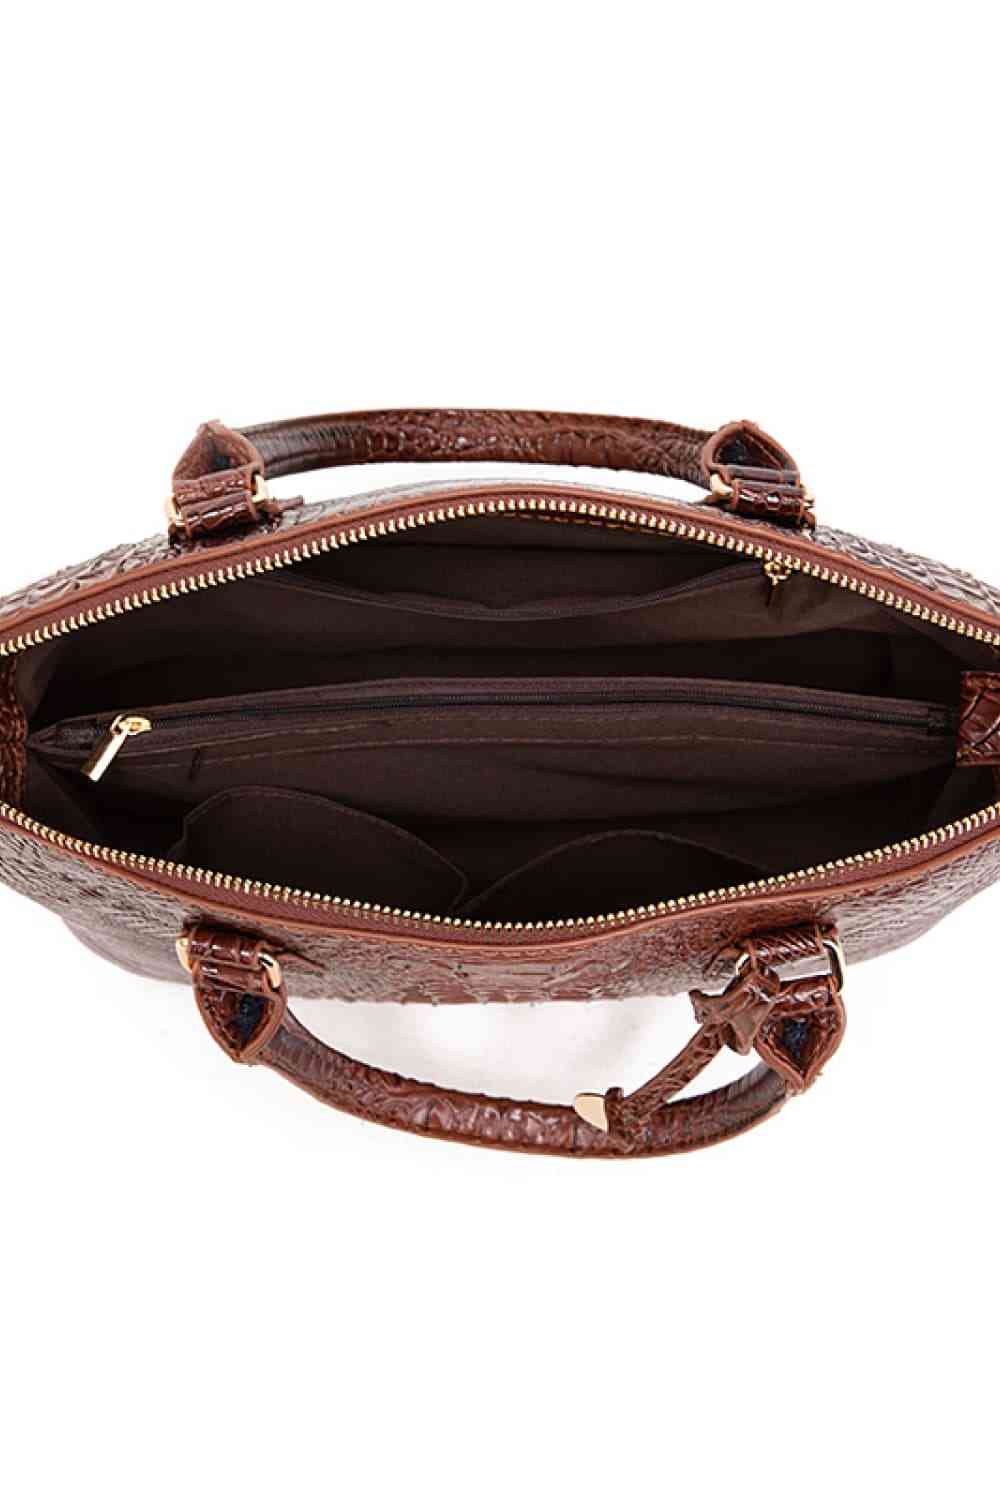 TEEK - Gradient Style Scheduler Handbag BAG TEEK Trend   